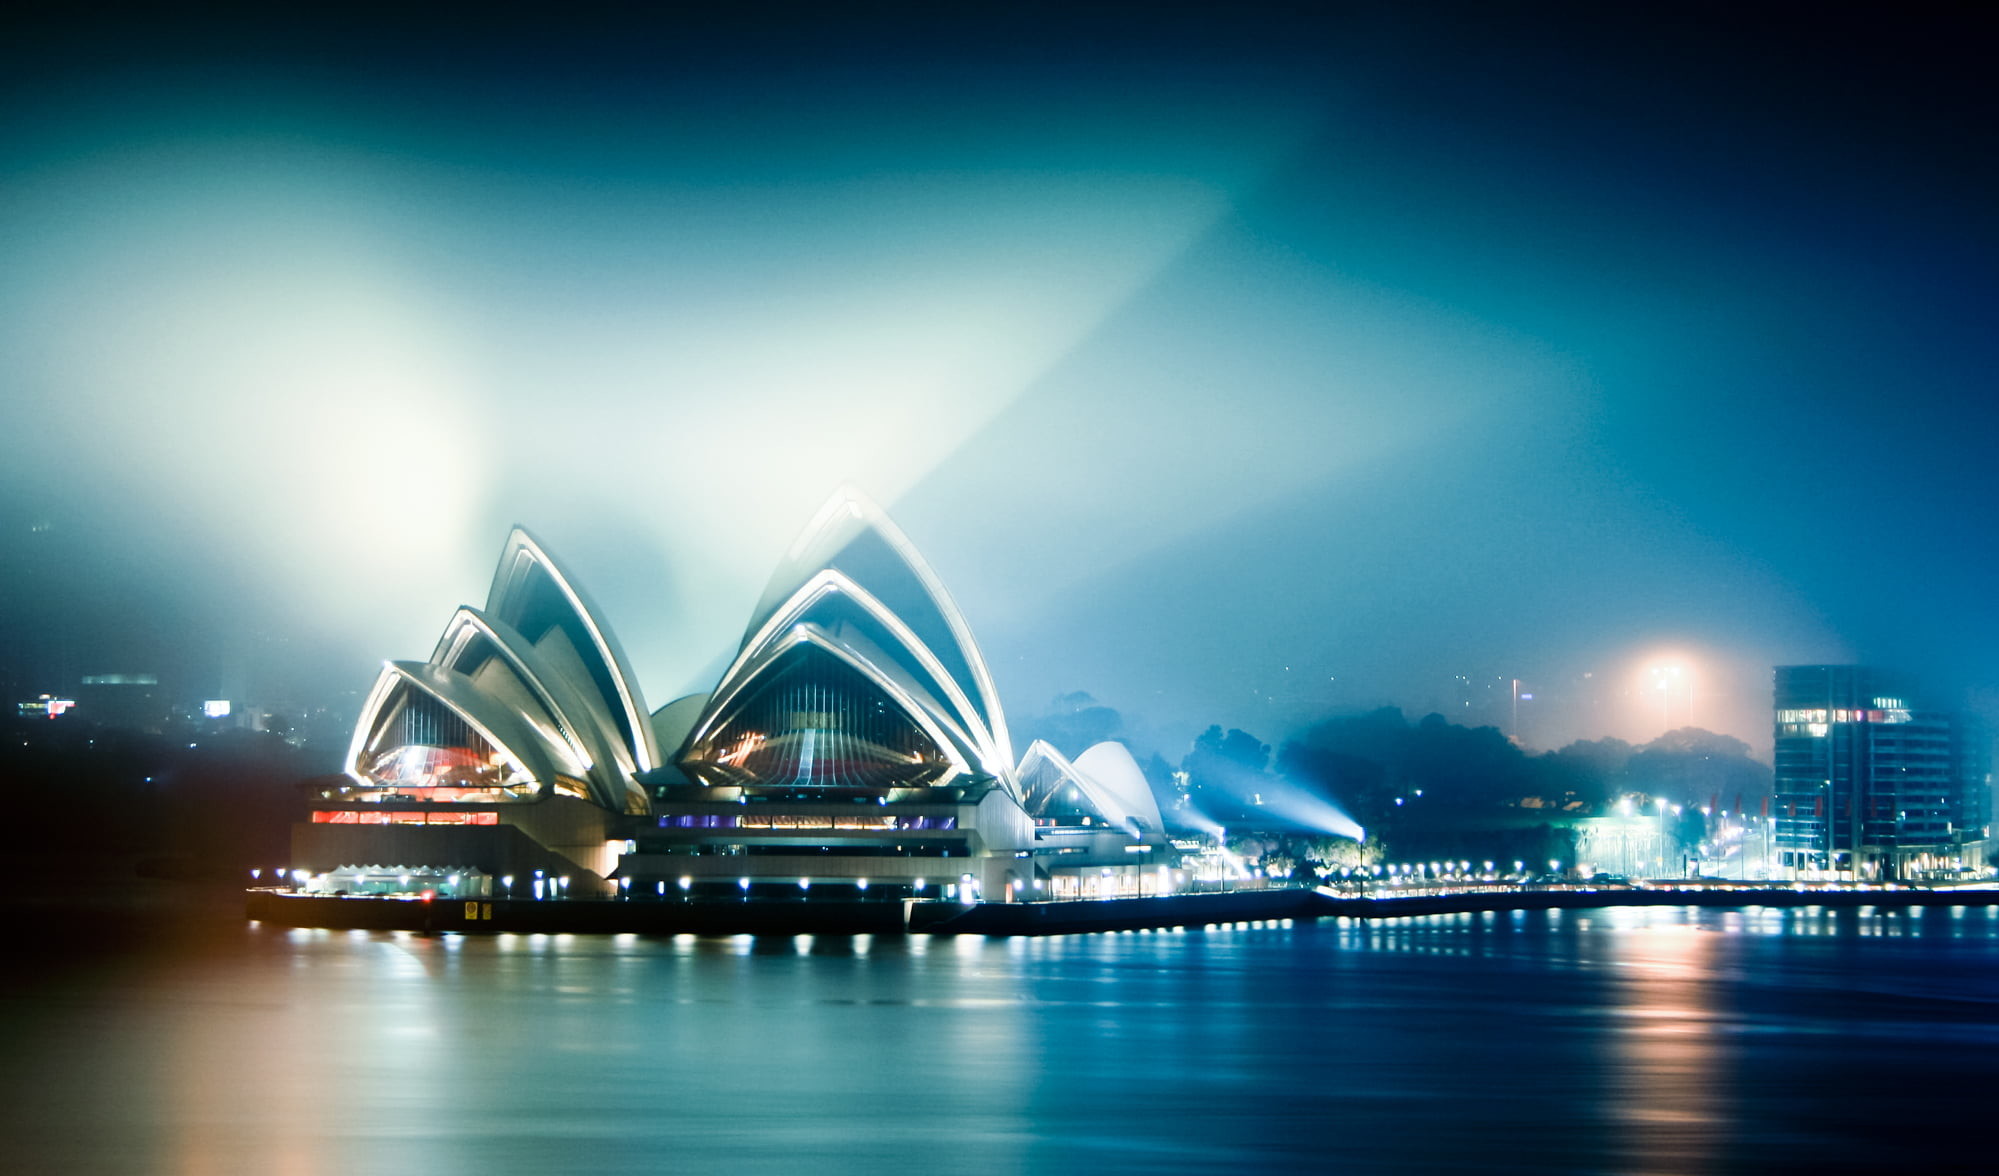 1999x1176 Sydney Opera House at night